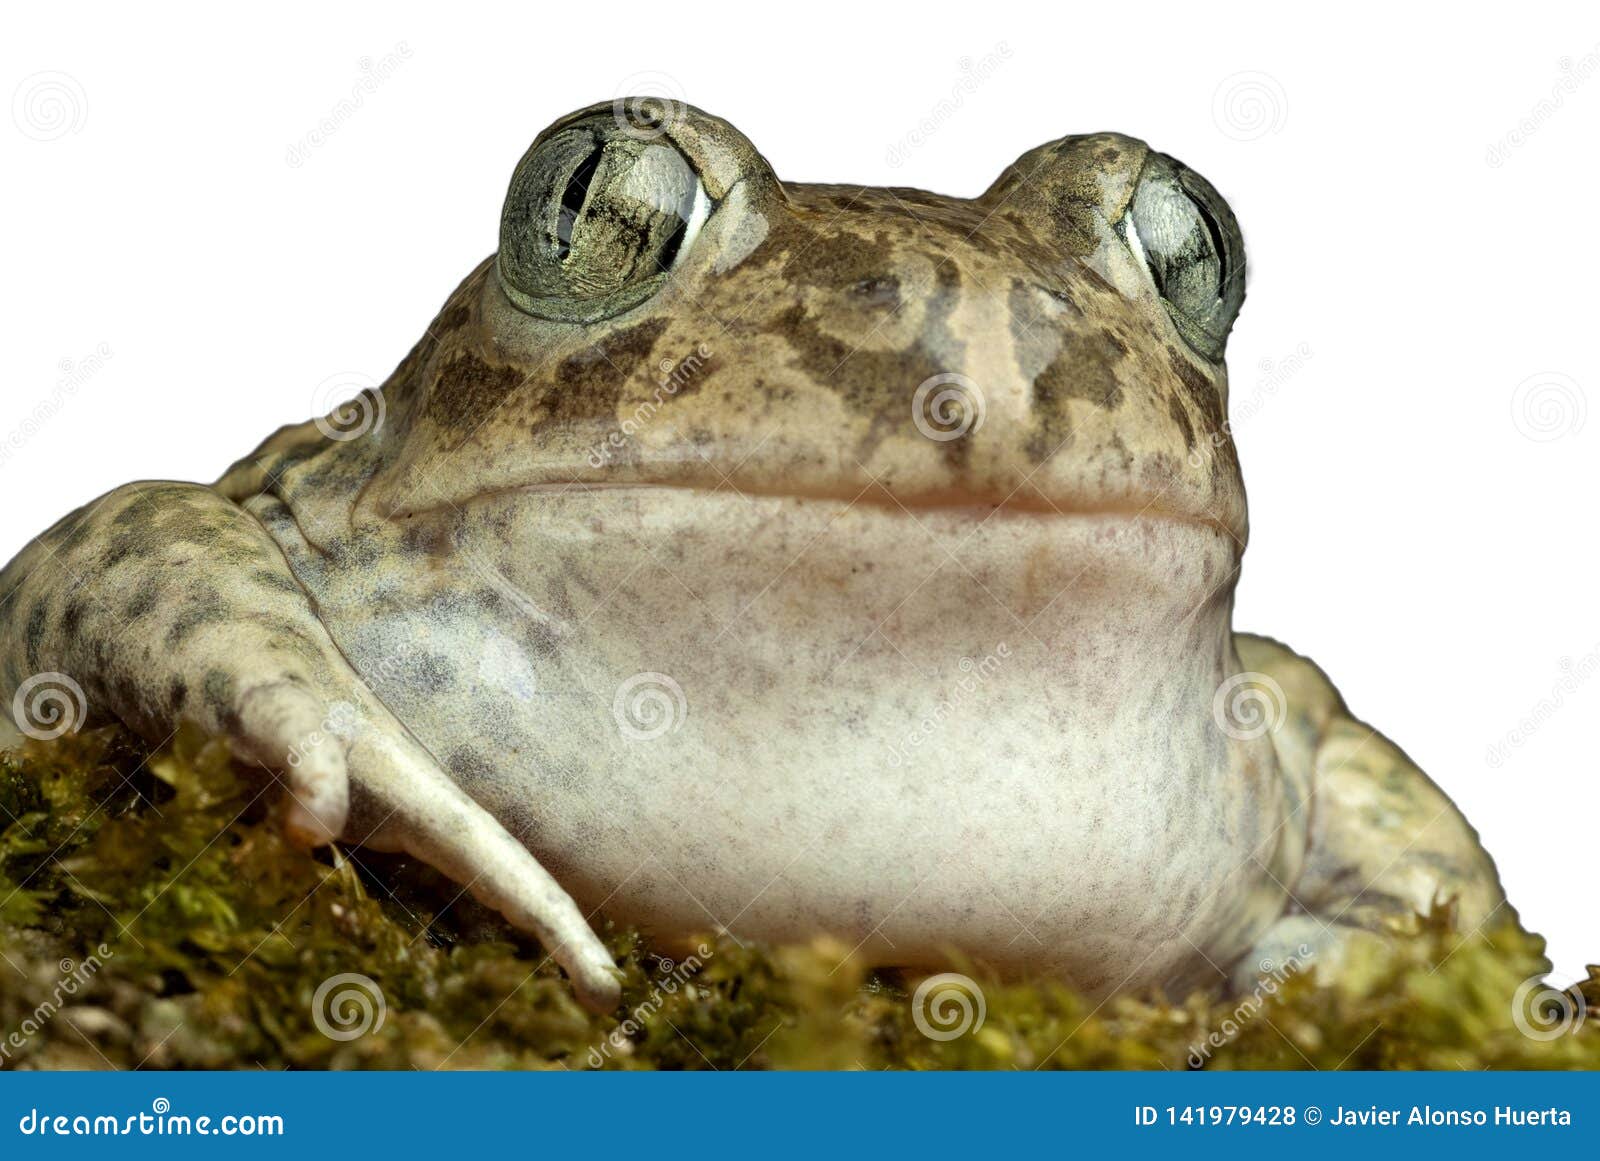 spadefoot toad, pelobates cultripes,